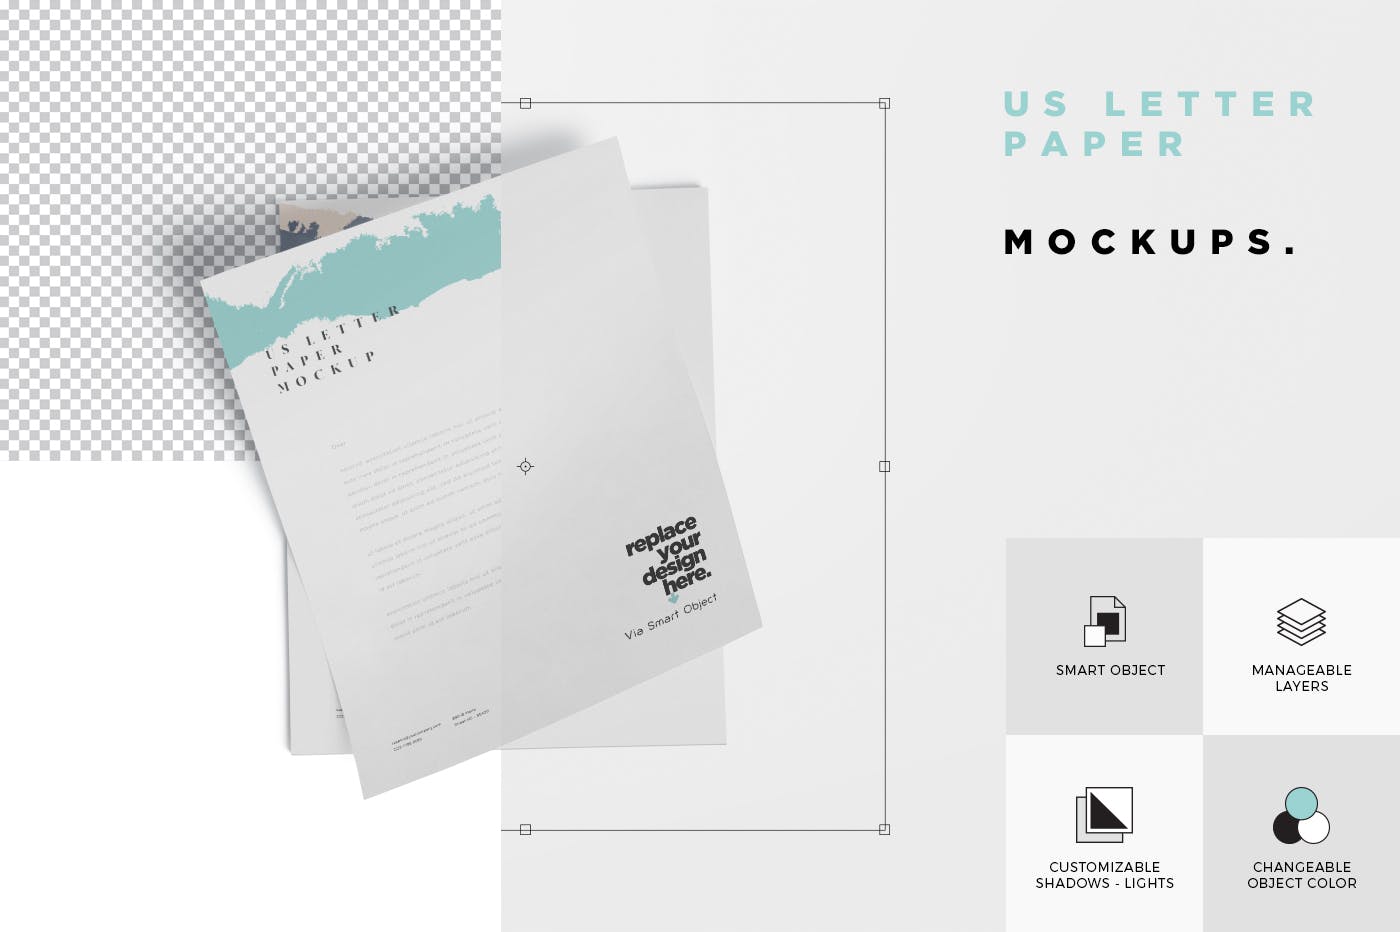 美国尺寸规格信纸设计样机模板 5 US Letter Paper Mockups插图(6)